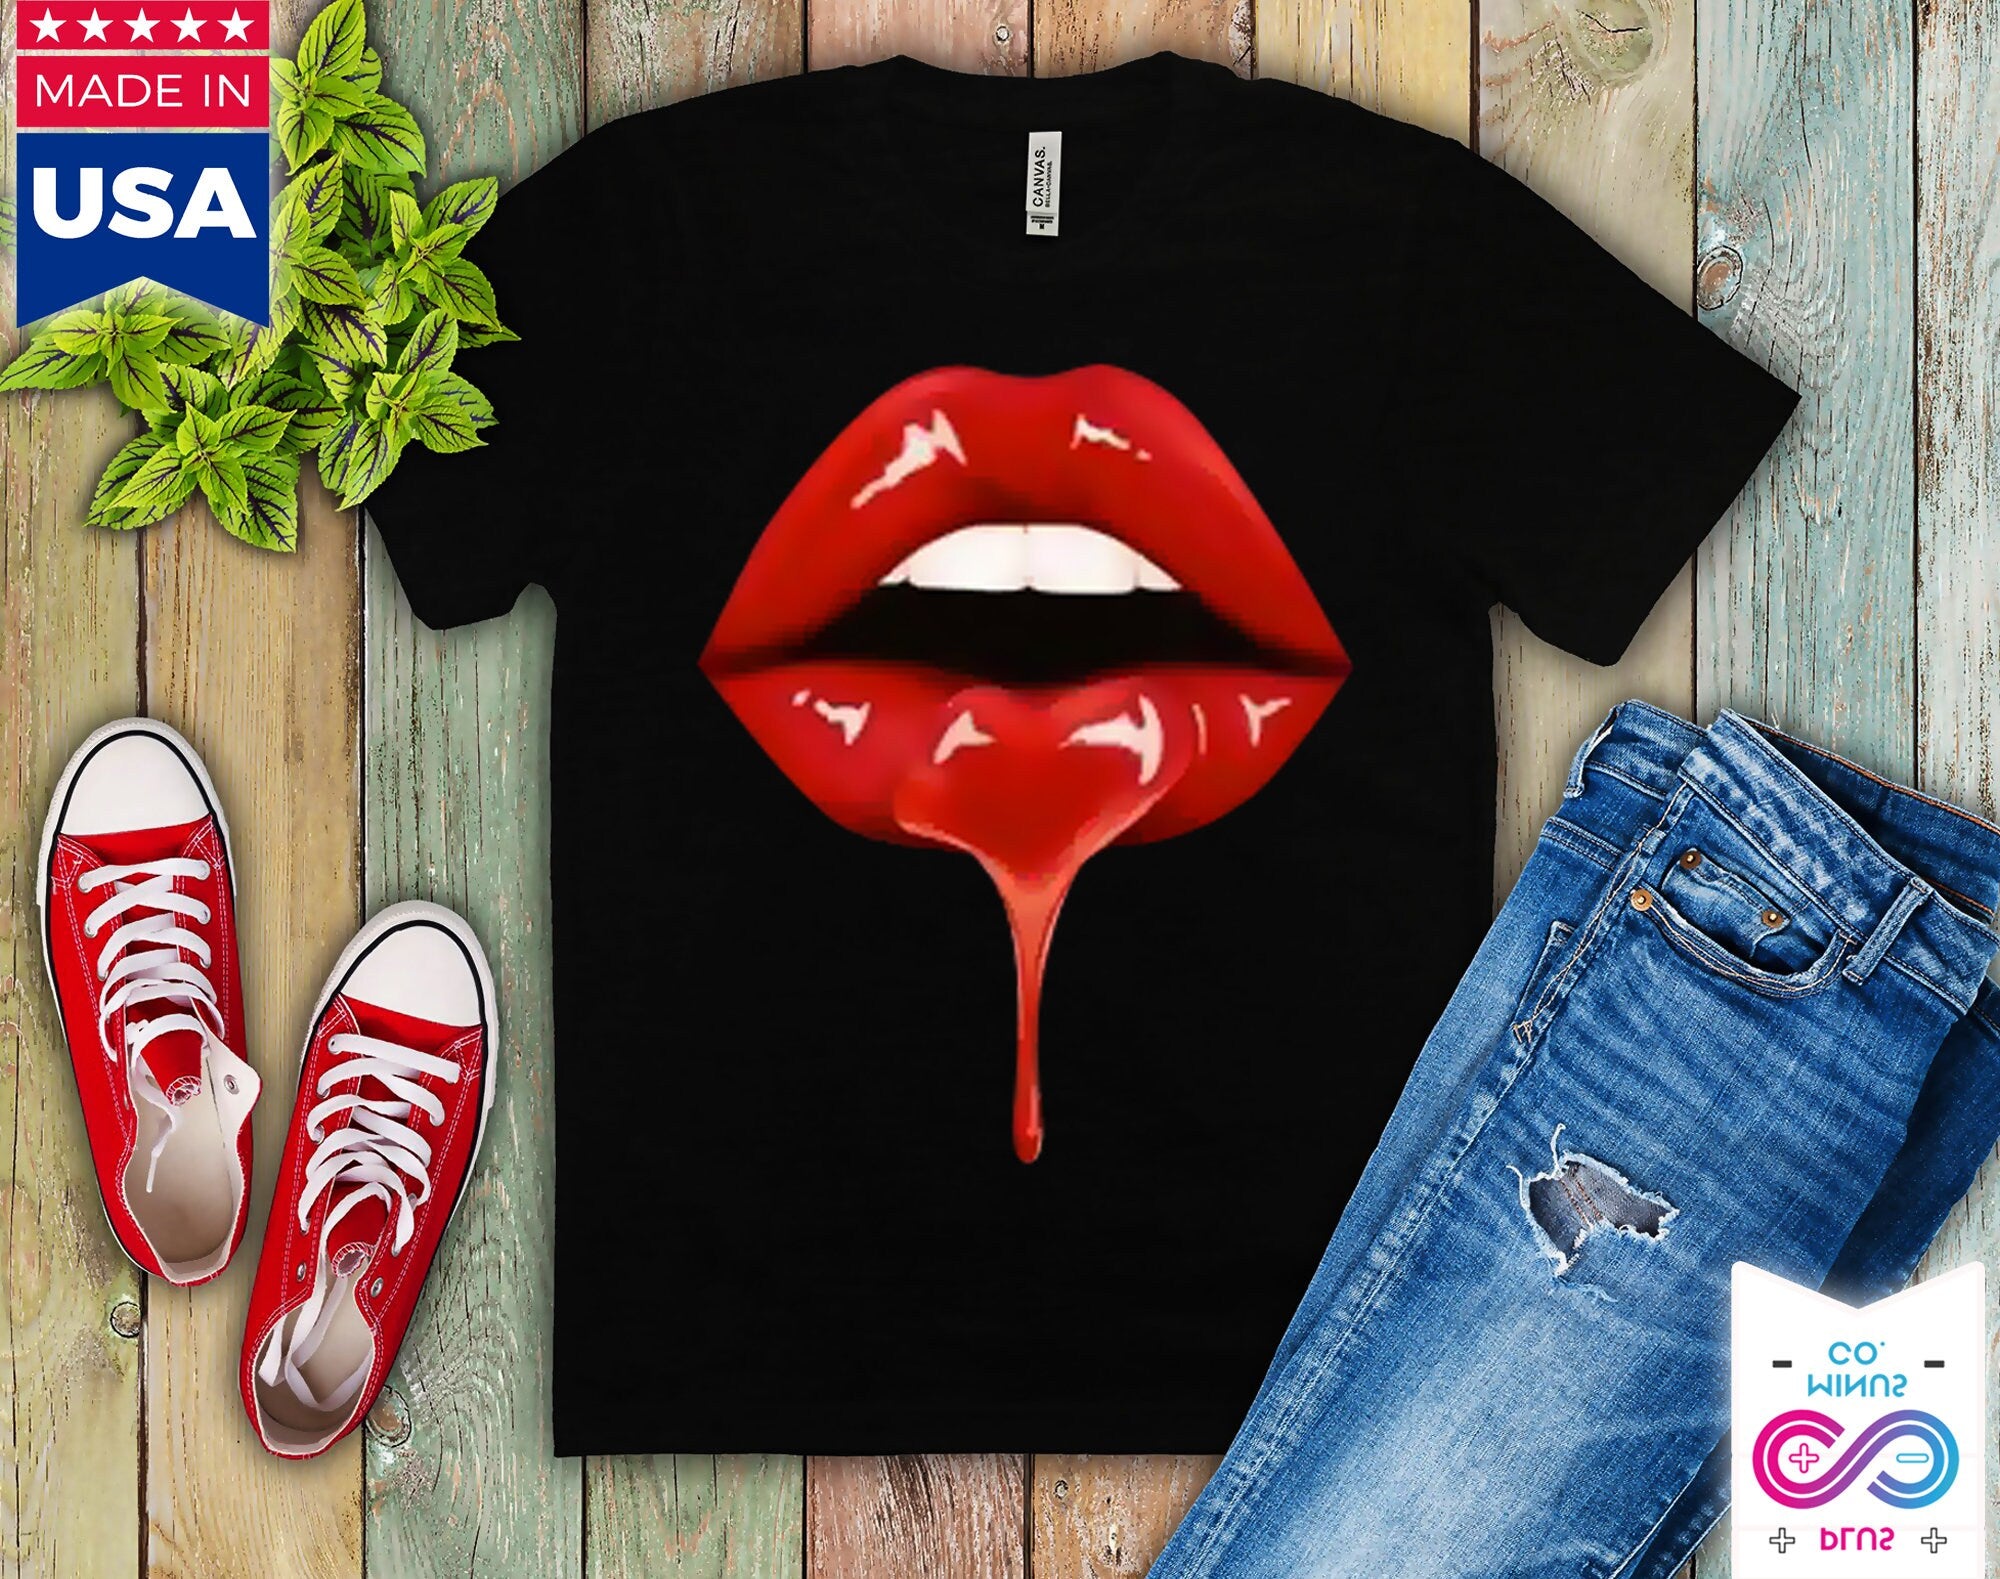 Women Lip Funny Printed Girl Black T-Shirts - plusminusco.com